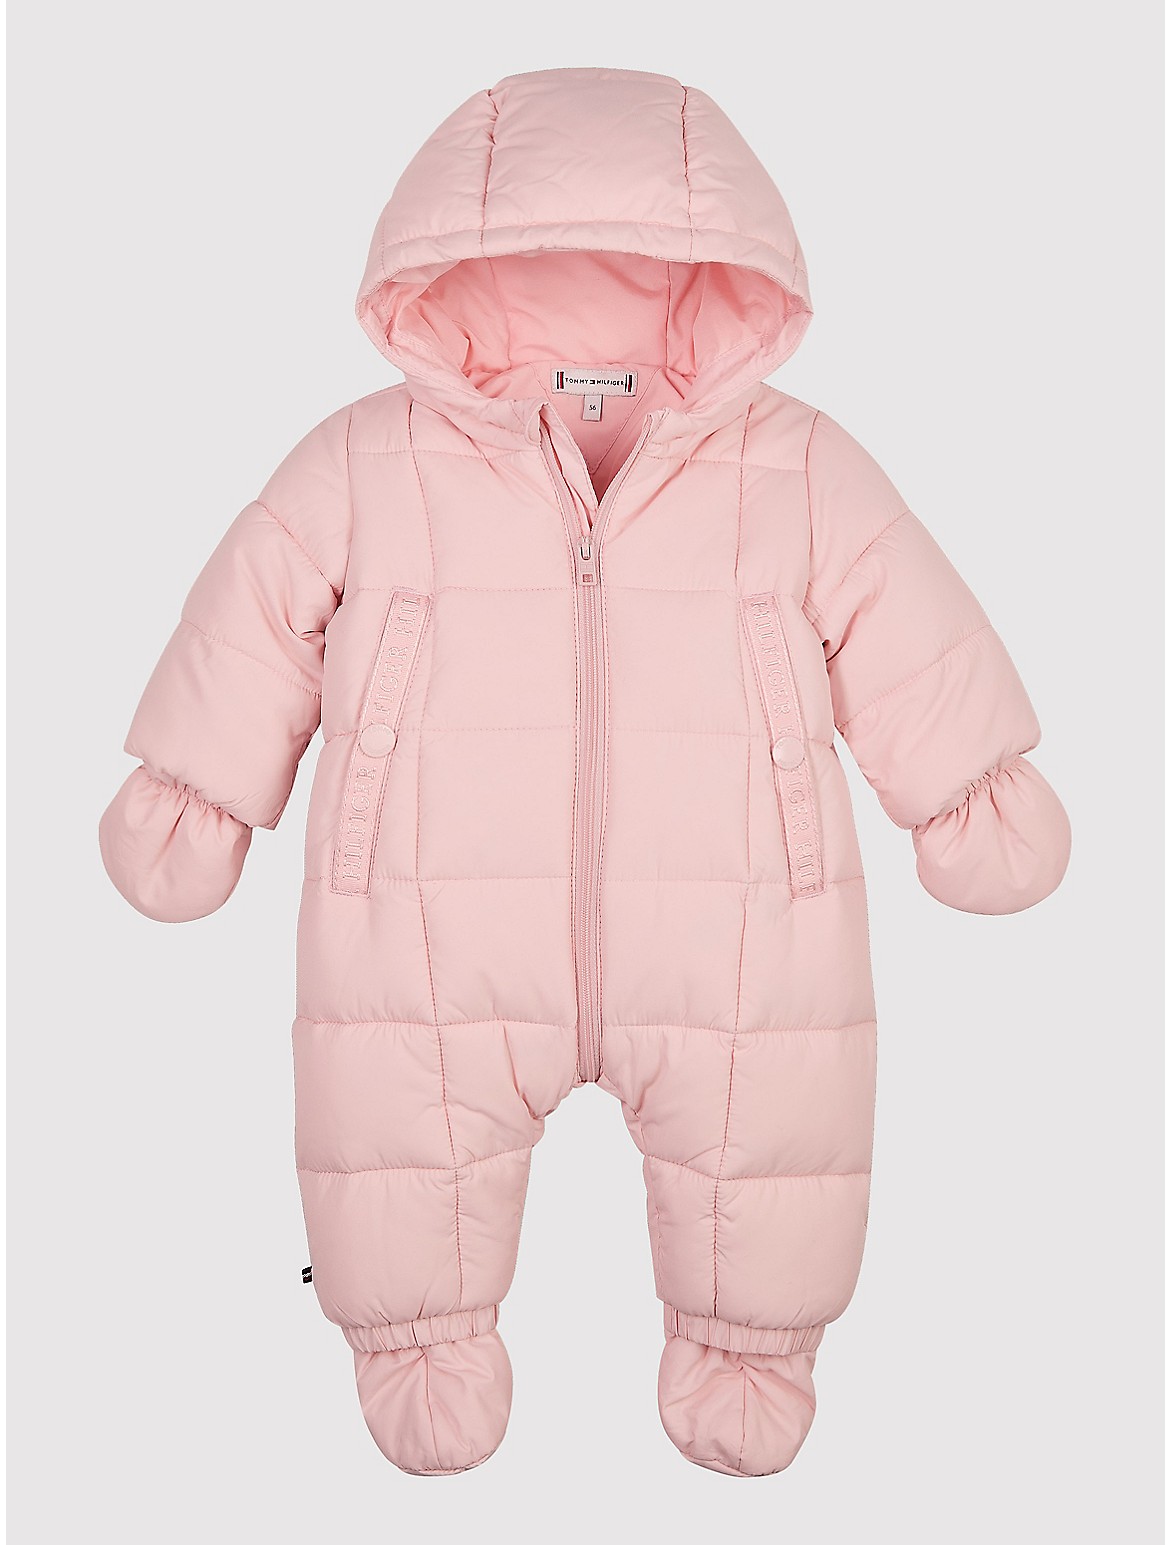 Tommy Hilfiger Babies' Ski Suit Set